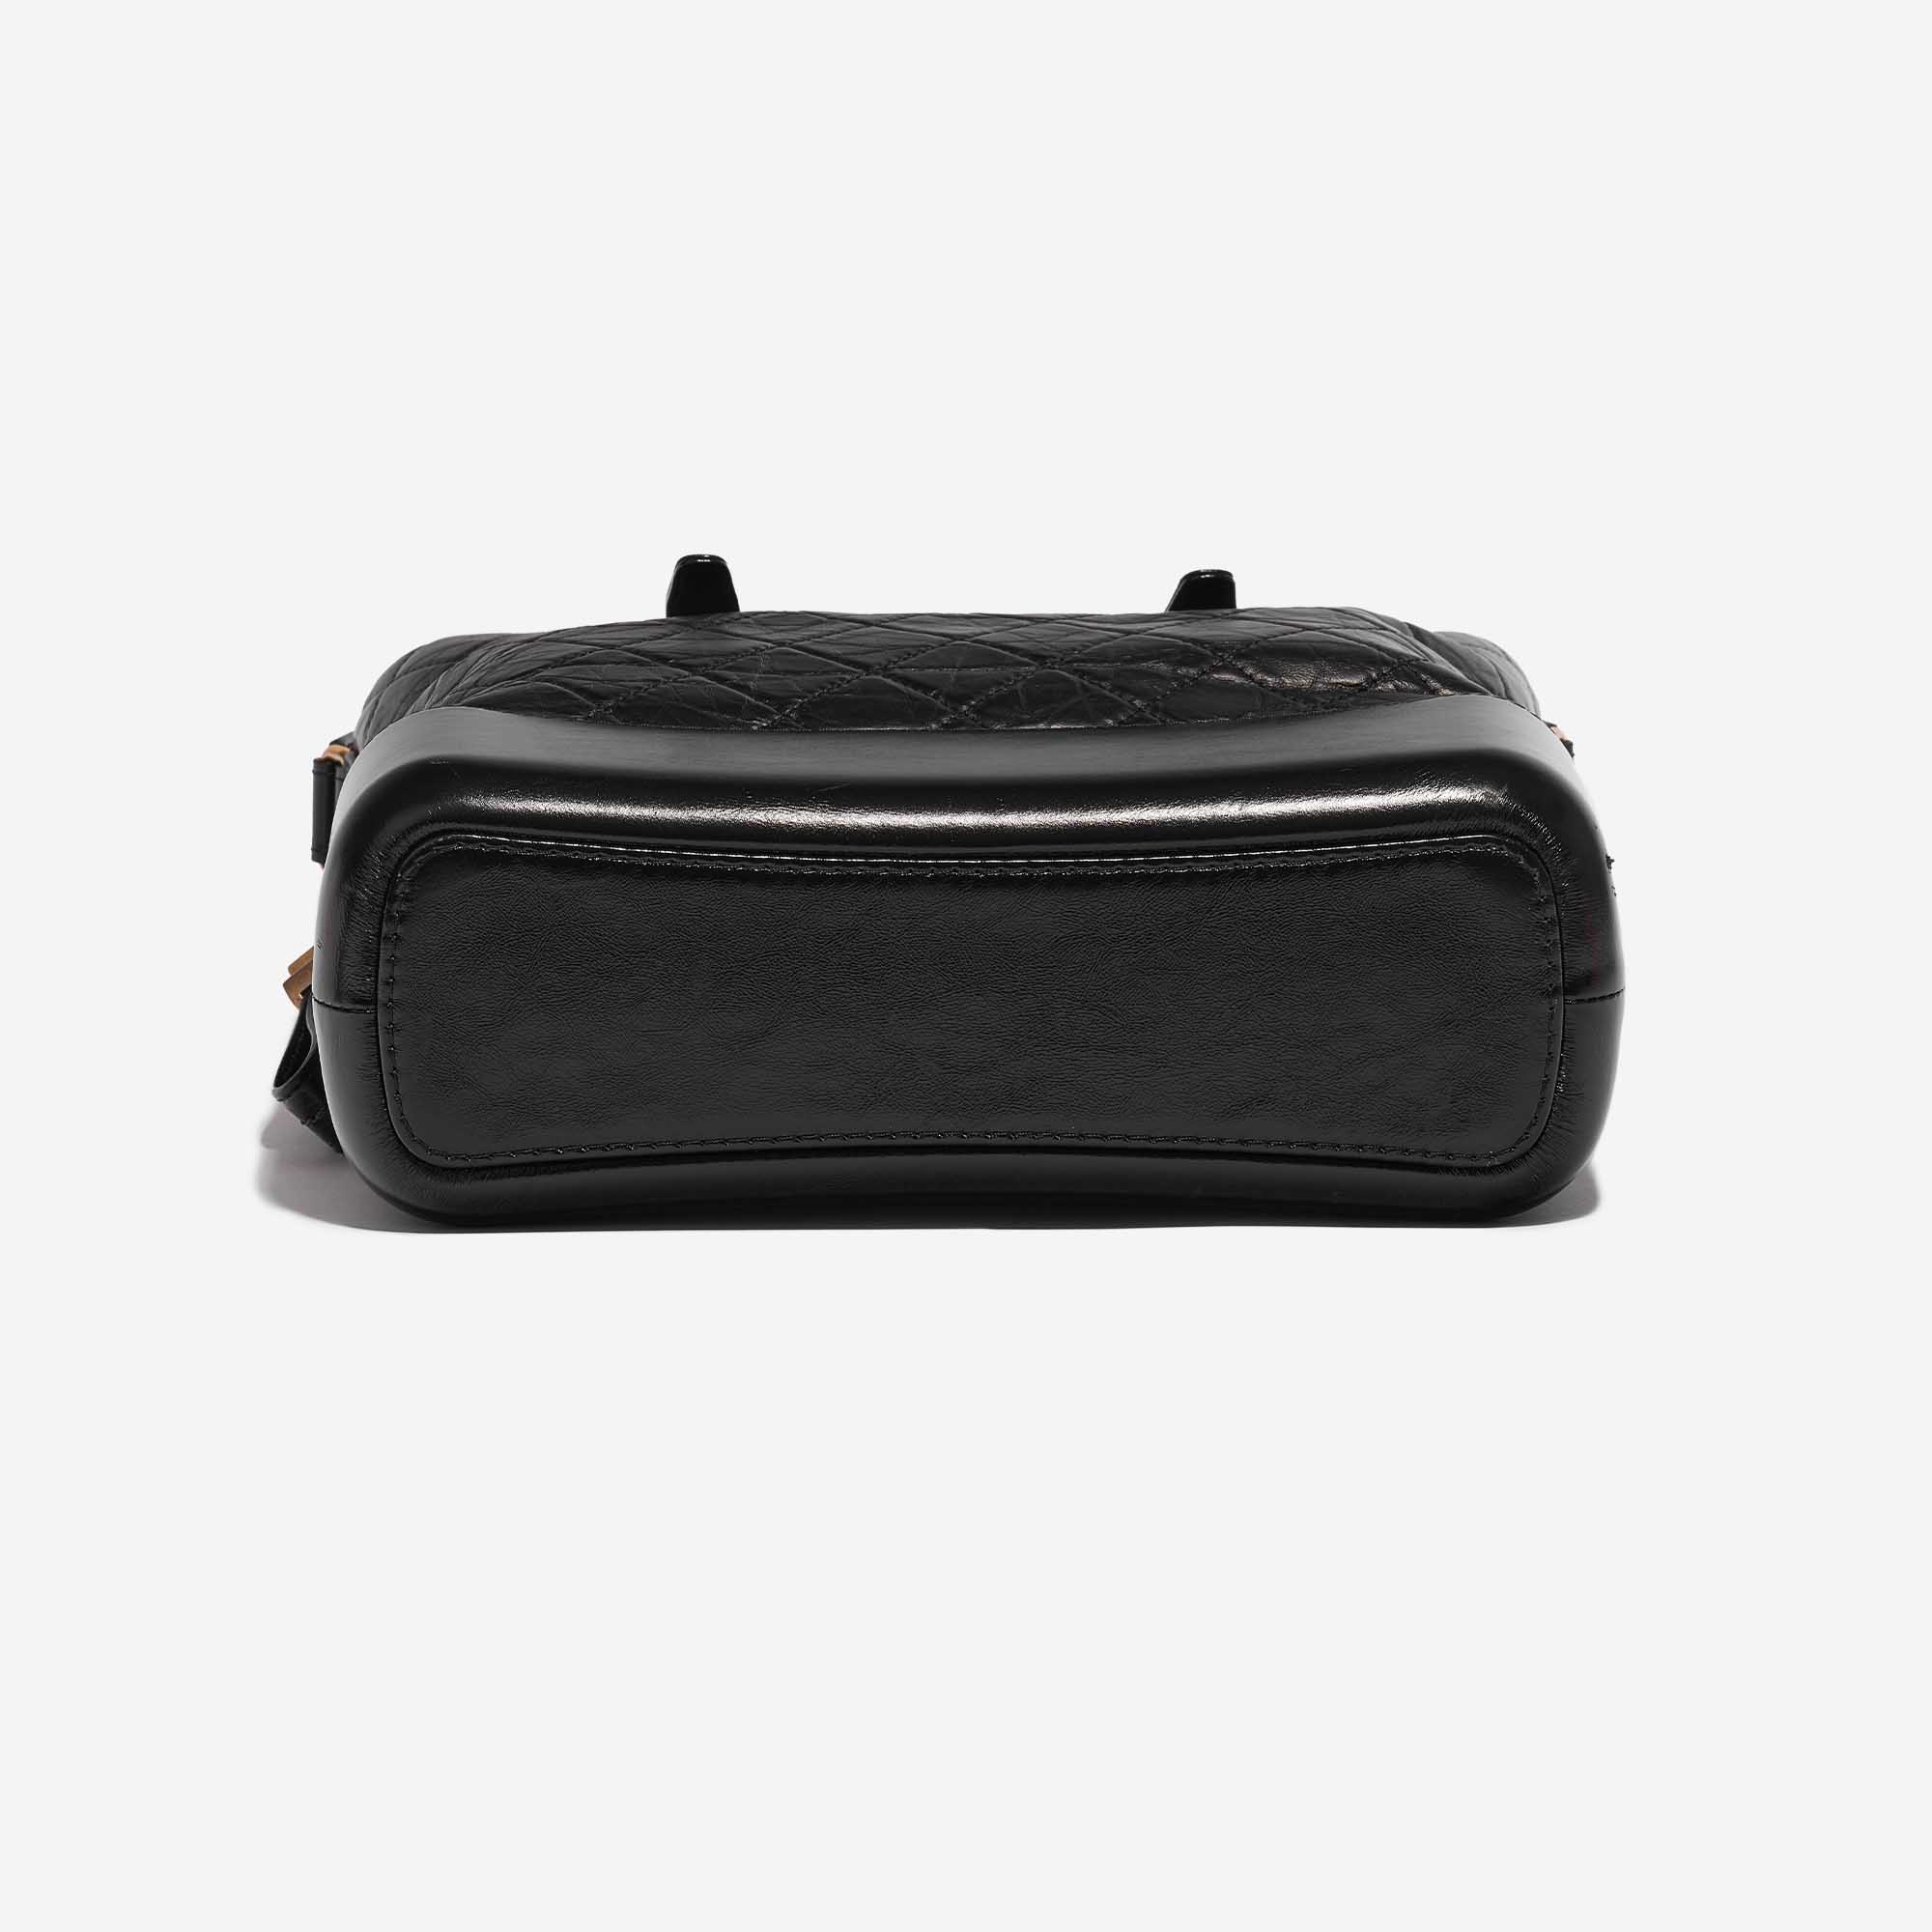 Pre-owned Chanel bag Gabrielle Medium Calf Black Black Bottom | Sell your designer bag on Saclab.com